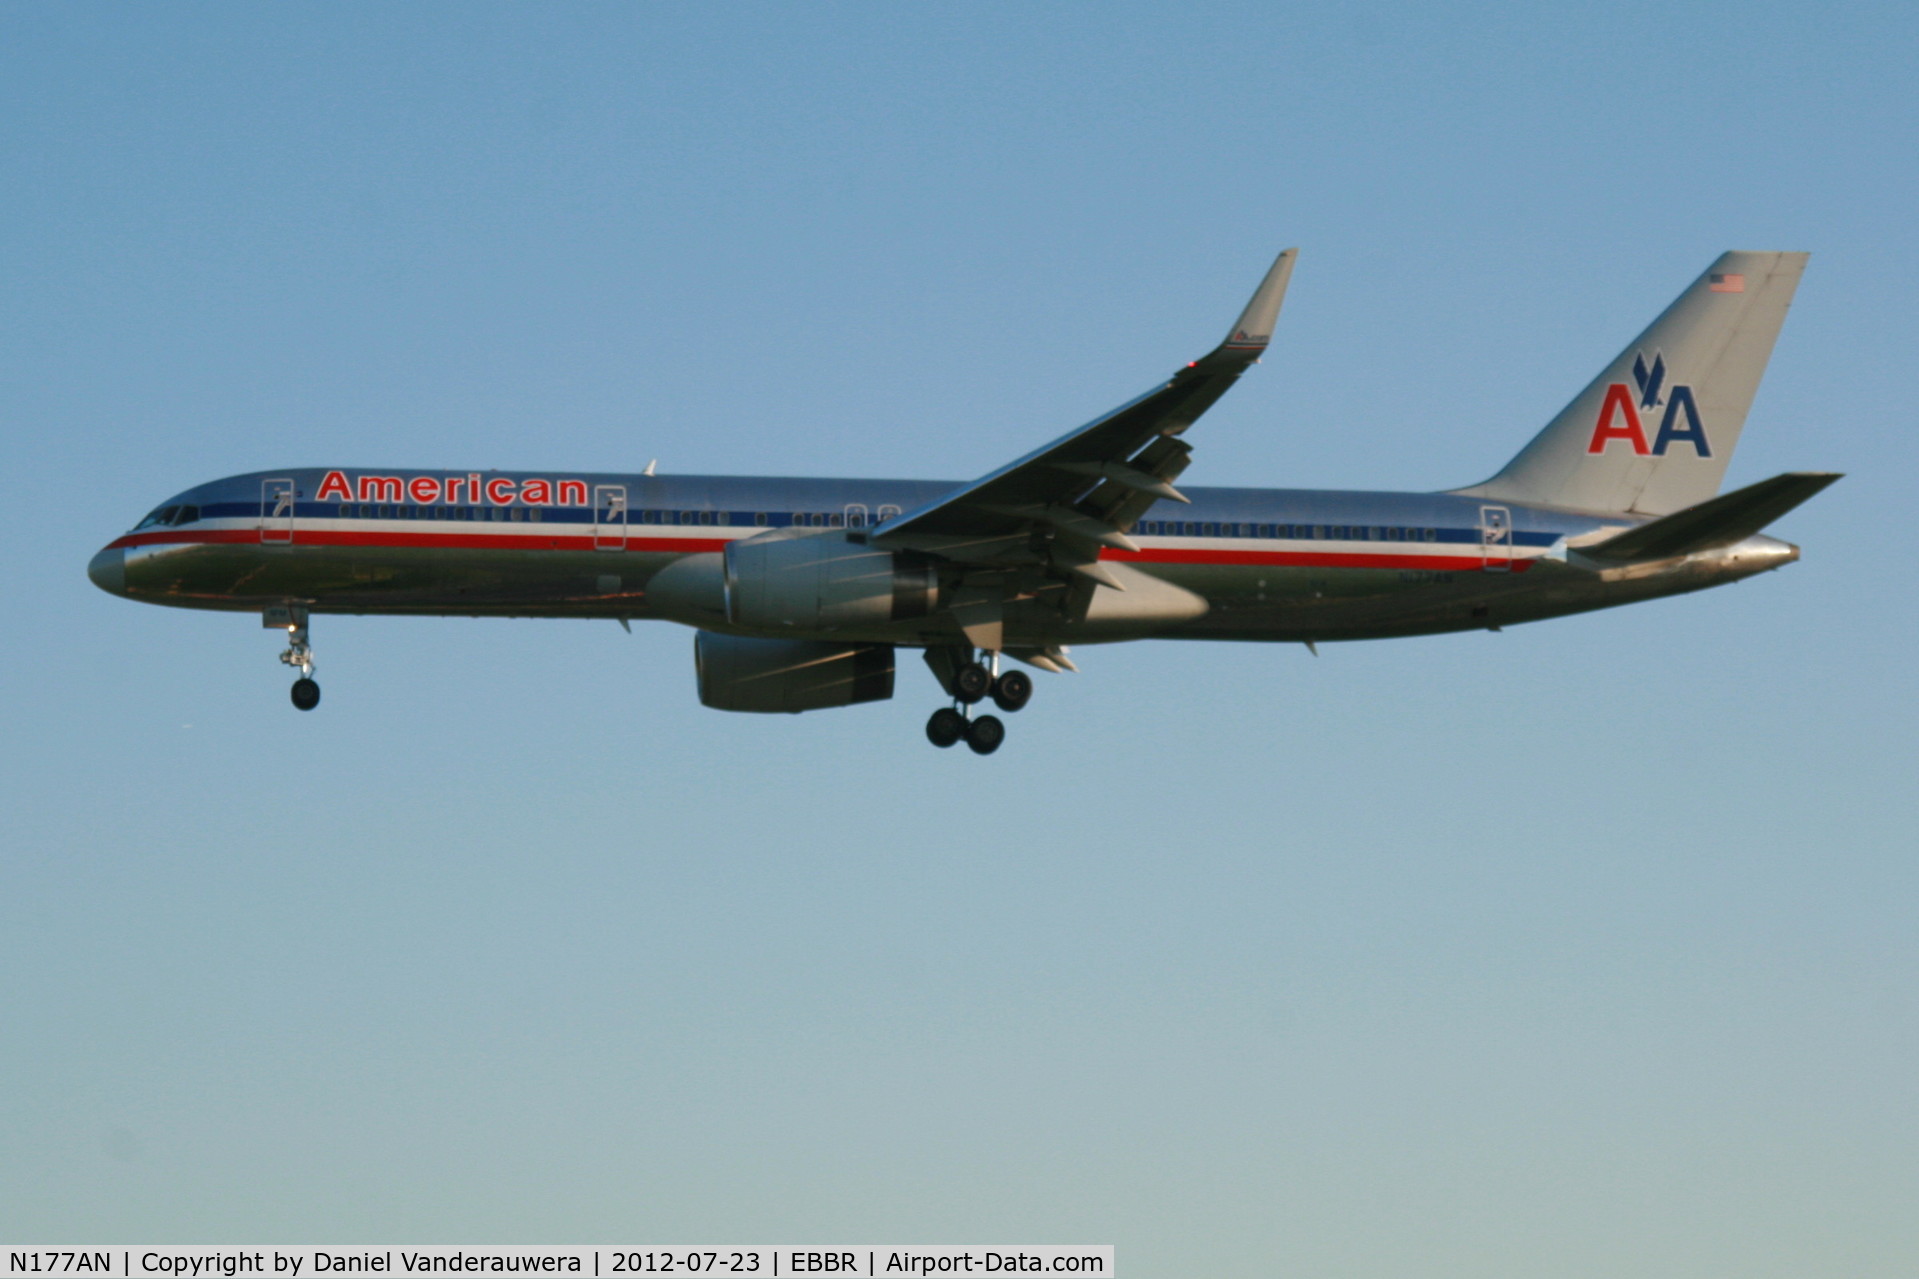 N177AN, 2002 Boeing 757-223 C/N 32396, Early arrival of flight AA172 to RWY 25L